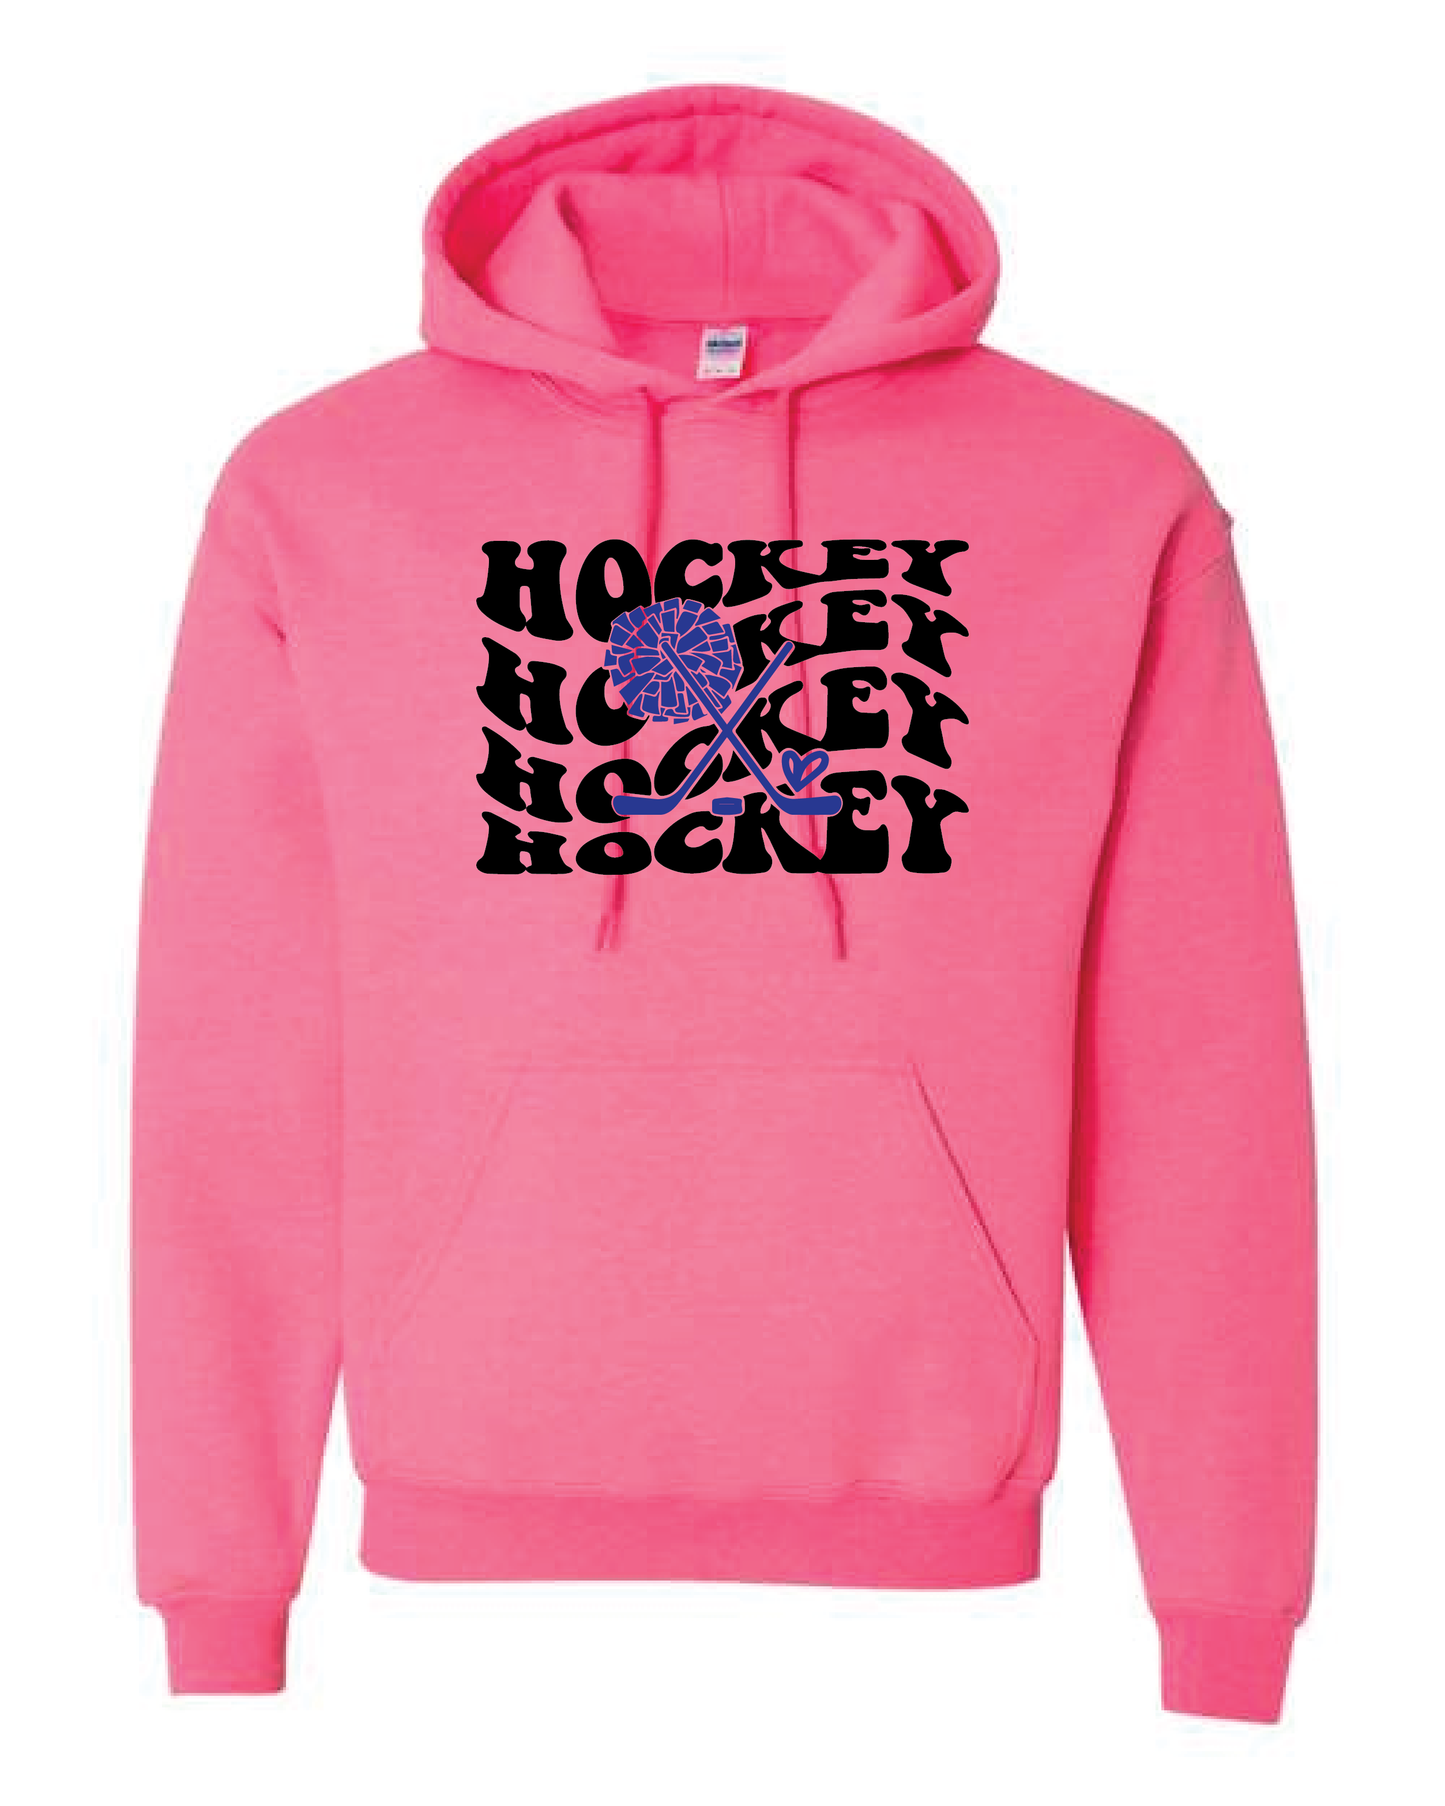 OHS Cheer Groovy Hockey Sweatshirt- Multiple Colors